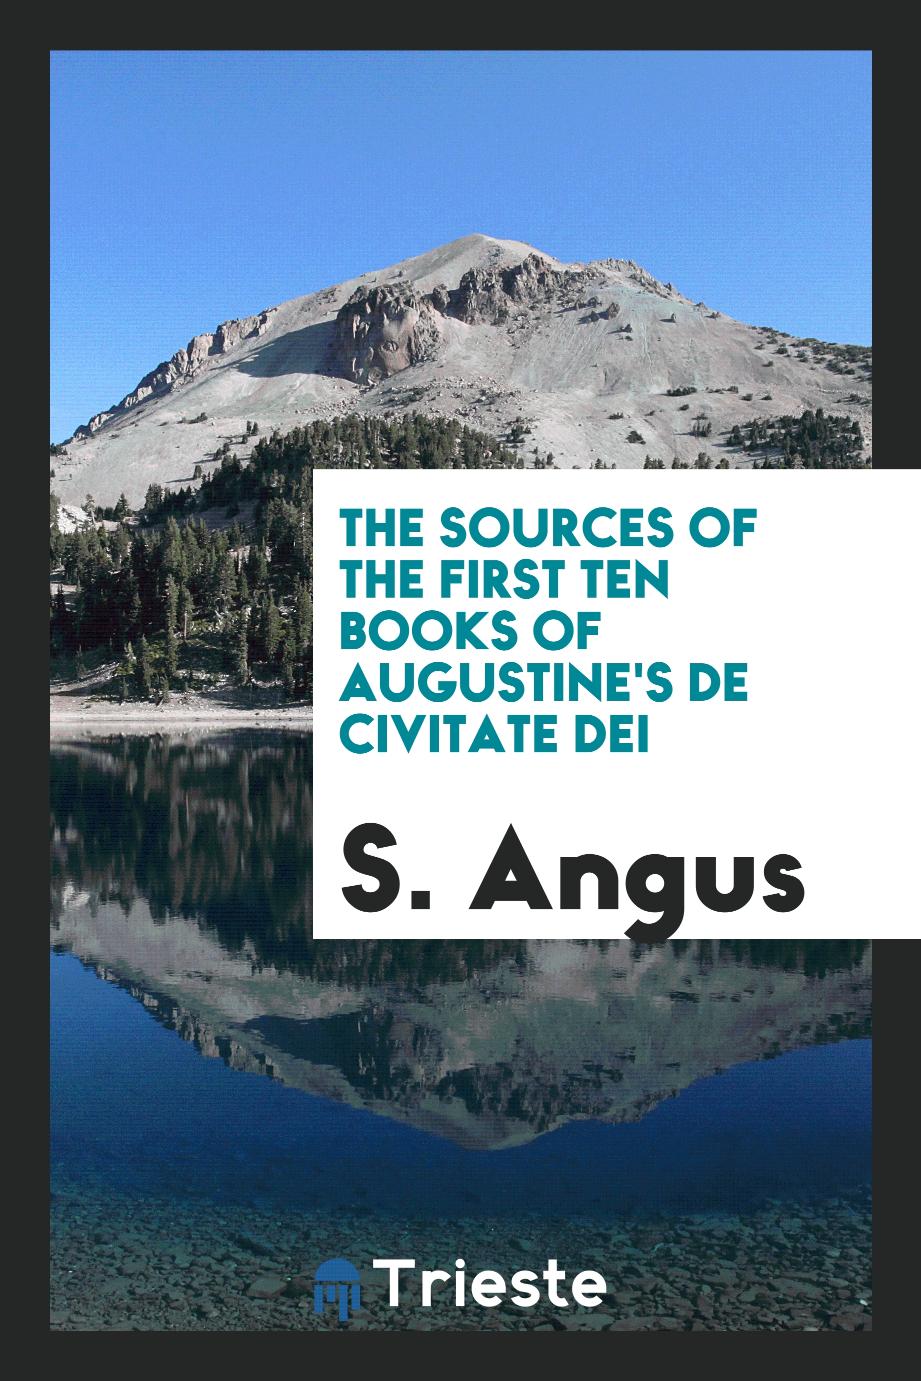 The sources of the first ten books of Augustine's De civitate dei